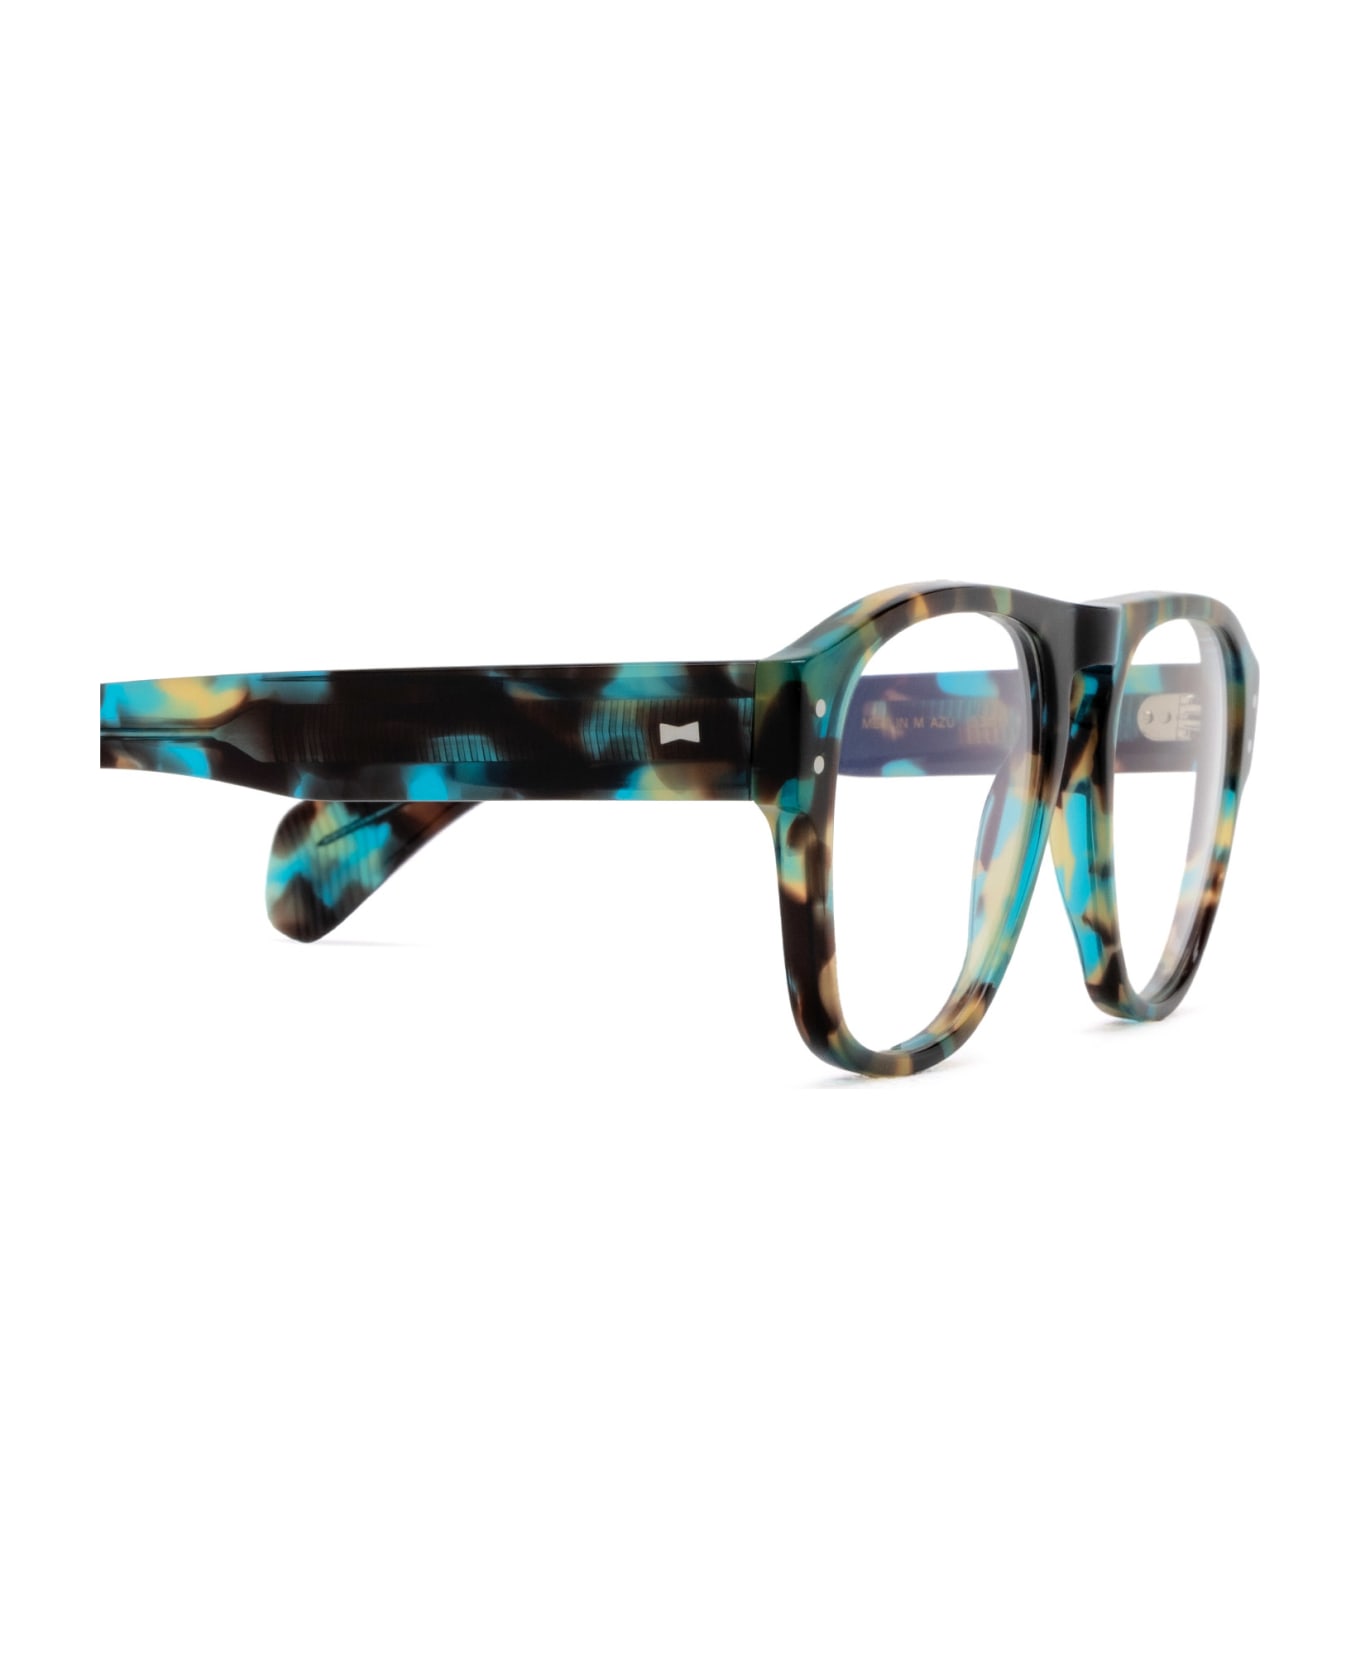 Cubitts Merlin Azure Turtle Glasses - Azure Turtle アイウェア